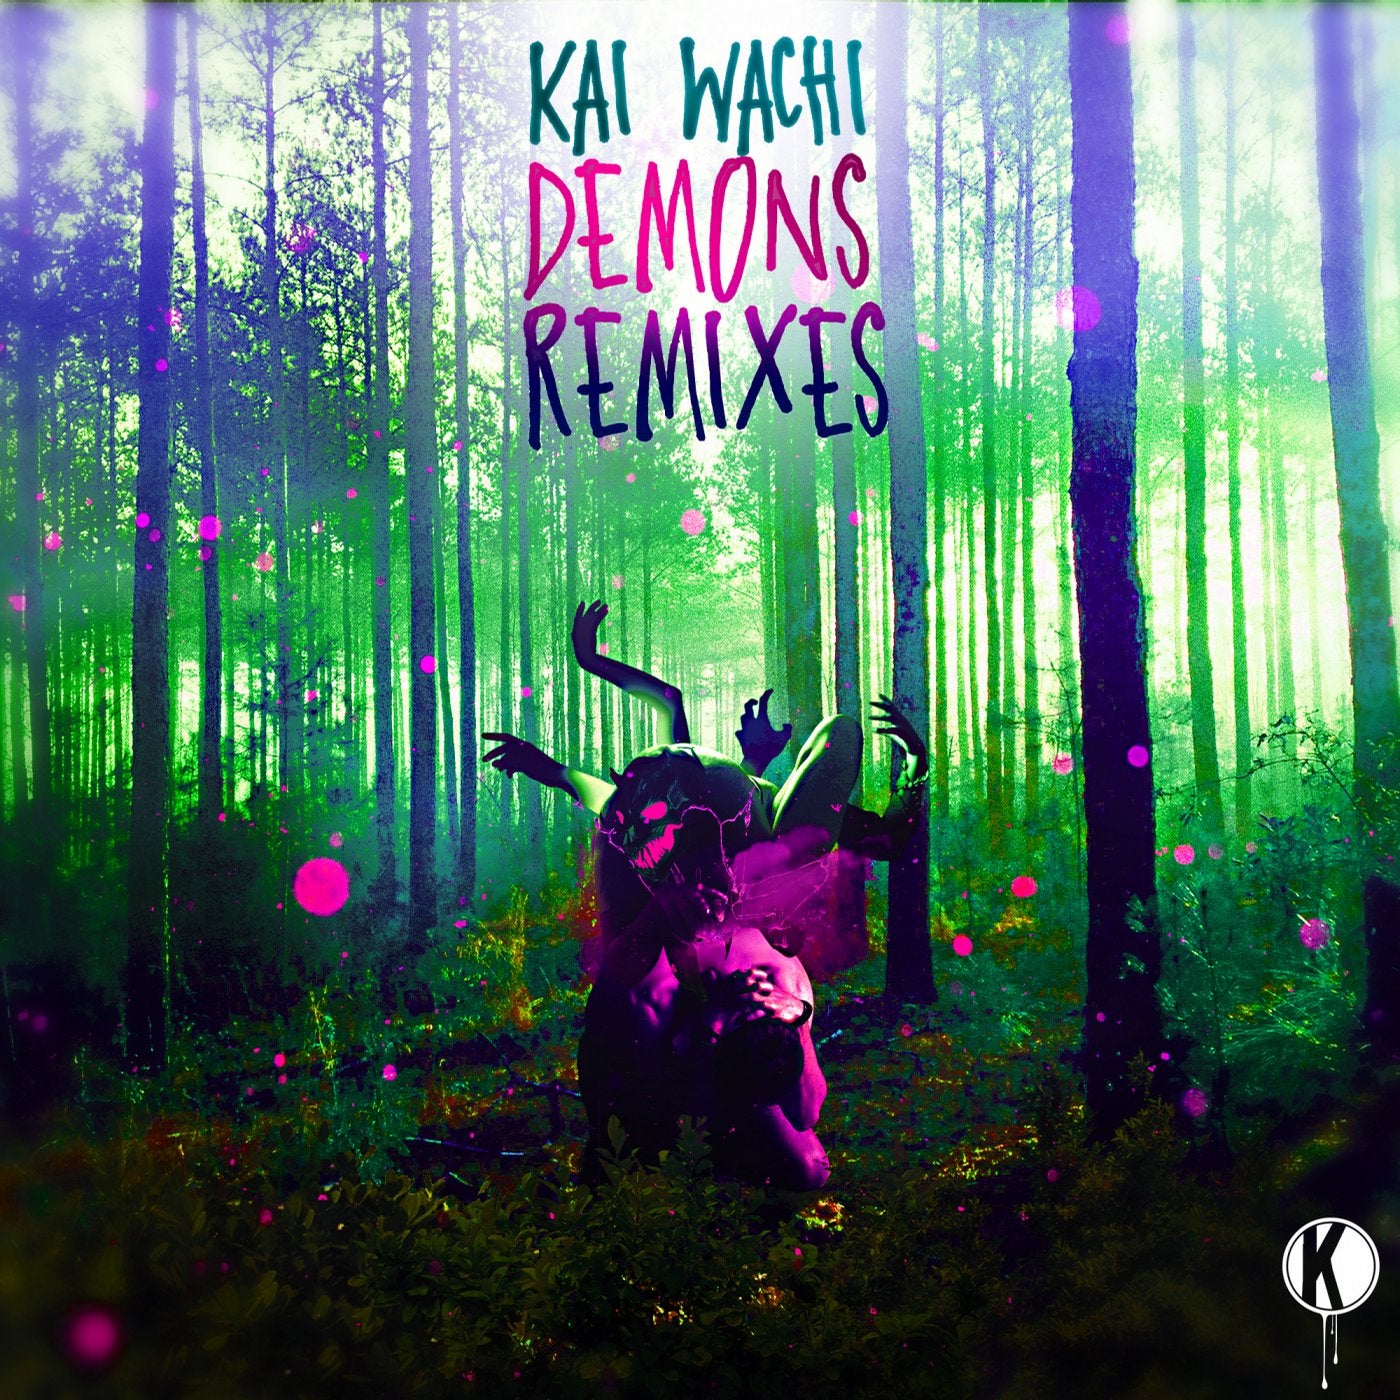 Demons Remixes